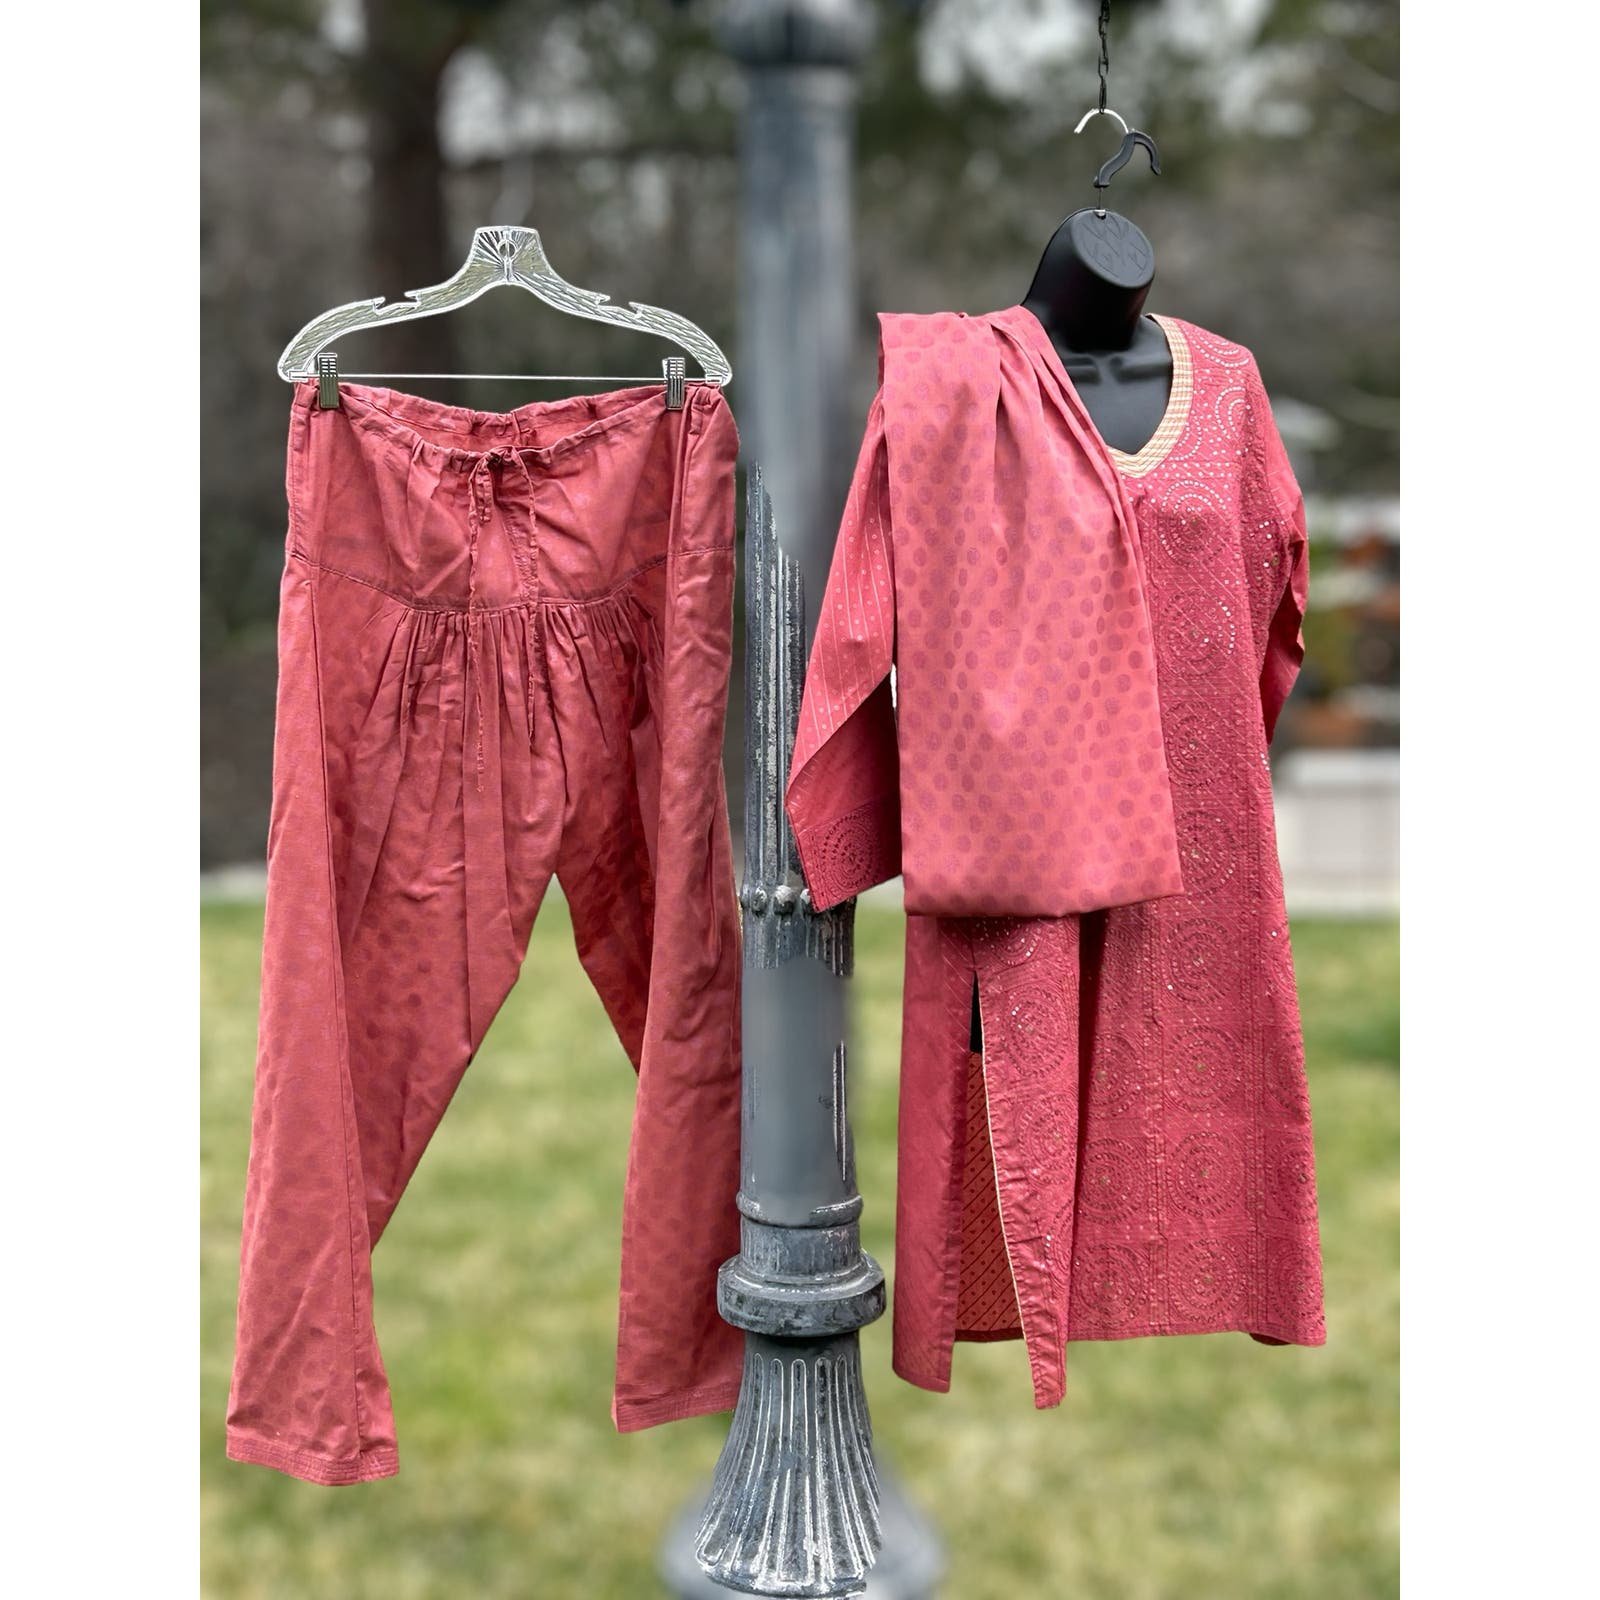 Pink Salwar Kameez 3 piece outfit from India, SZ XL fits medium/large MFsime2yH